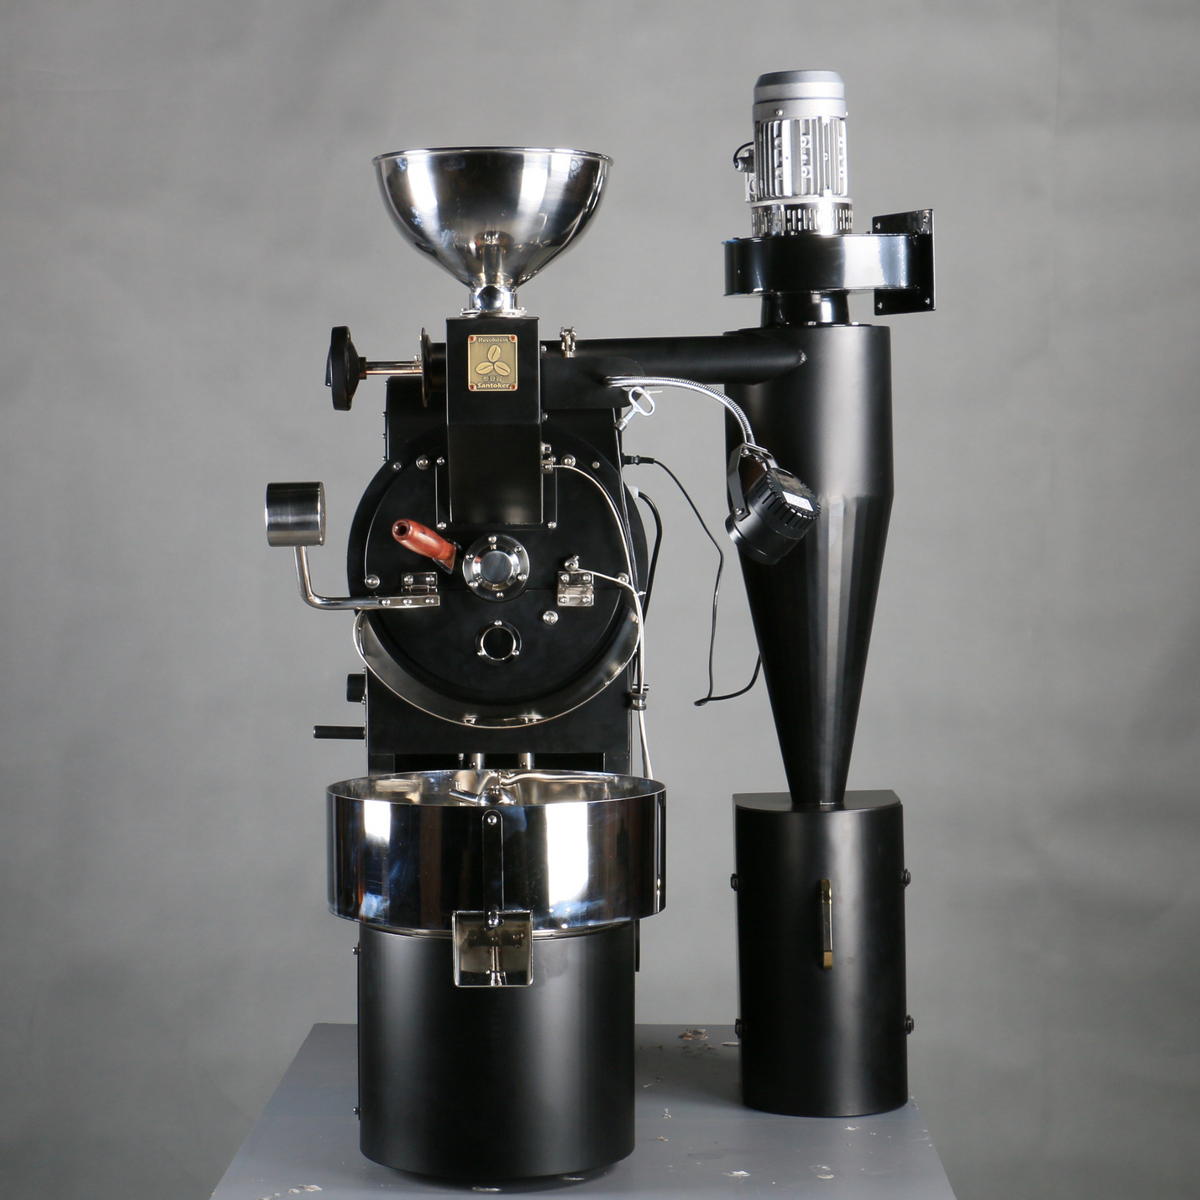 Santoker R3 手动咖啡烘焙机 - 3公斤/批